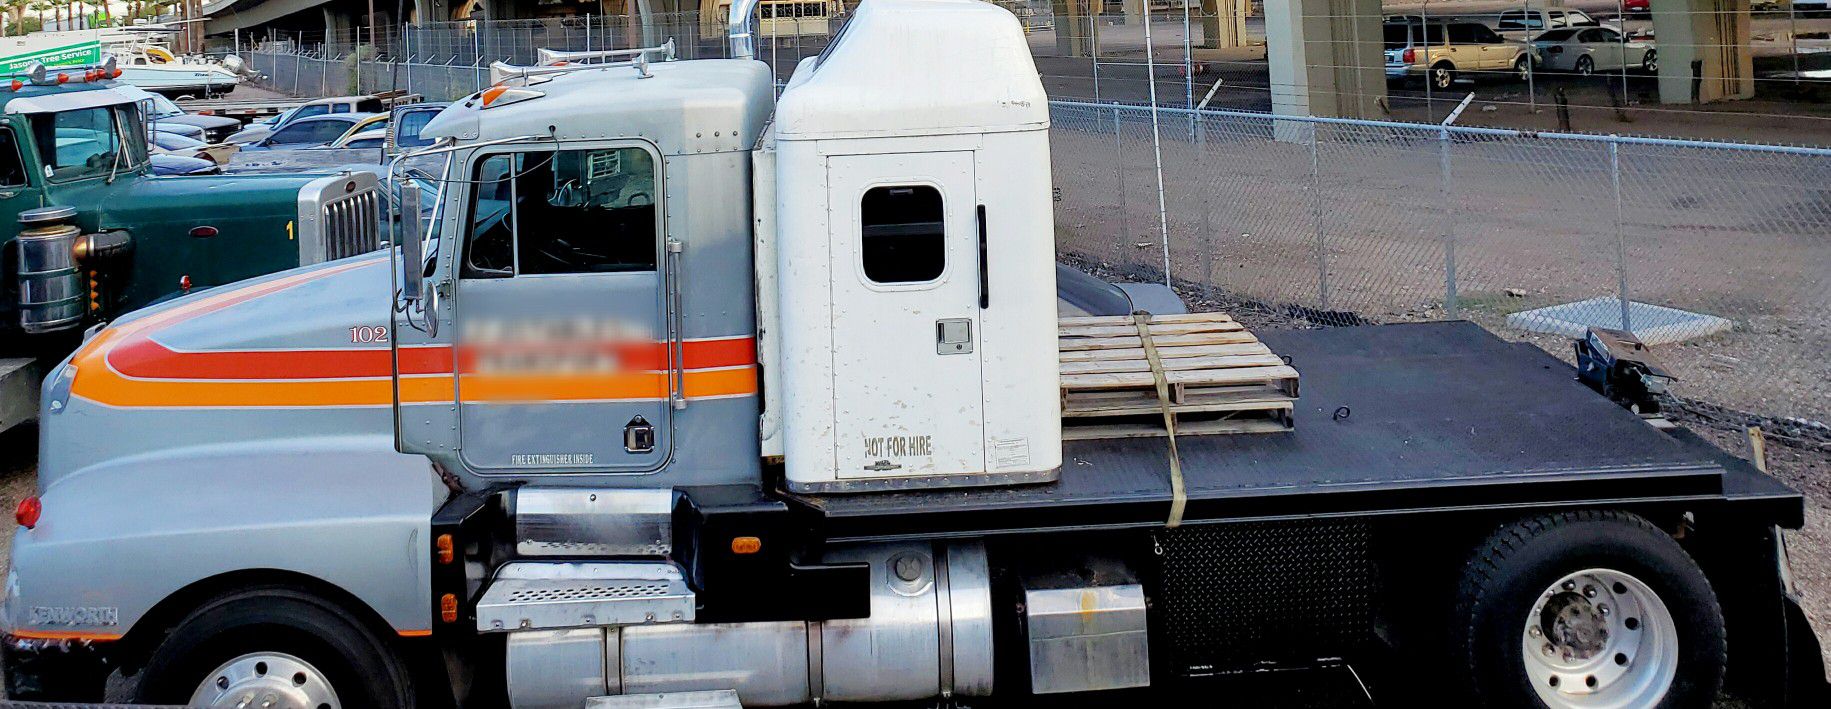 Kenworth T600 Car Hauler Toter Truck Flatbed For Sale In Phoenix Az